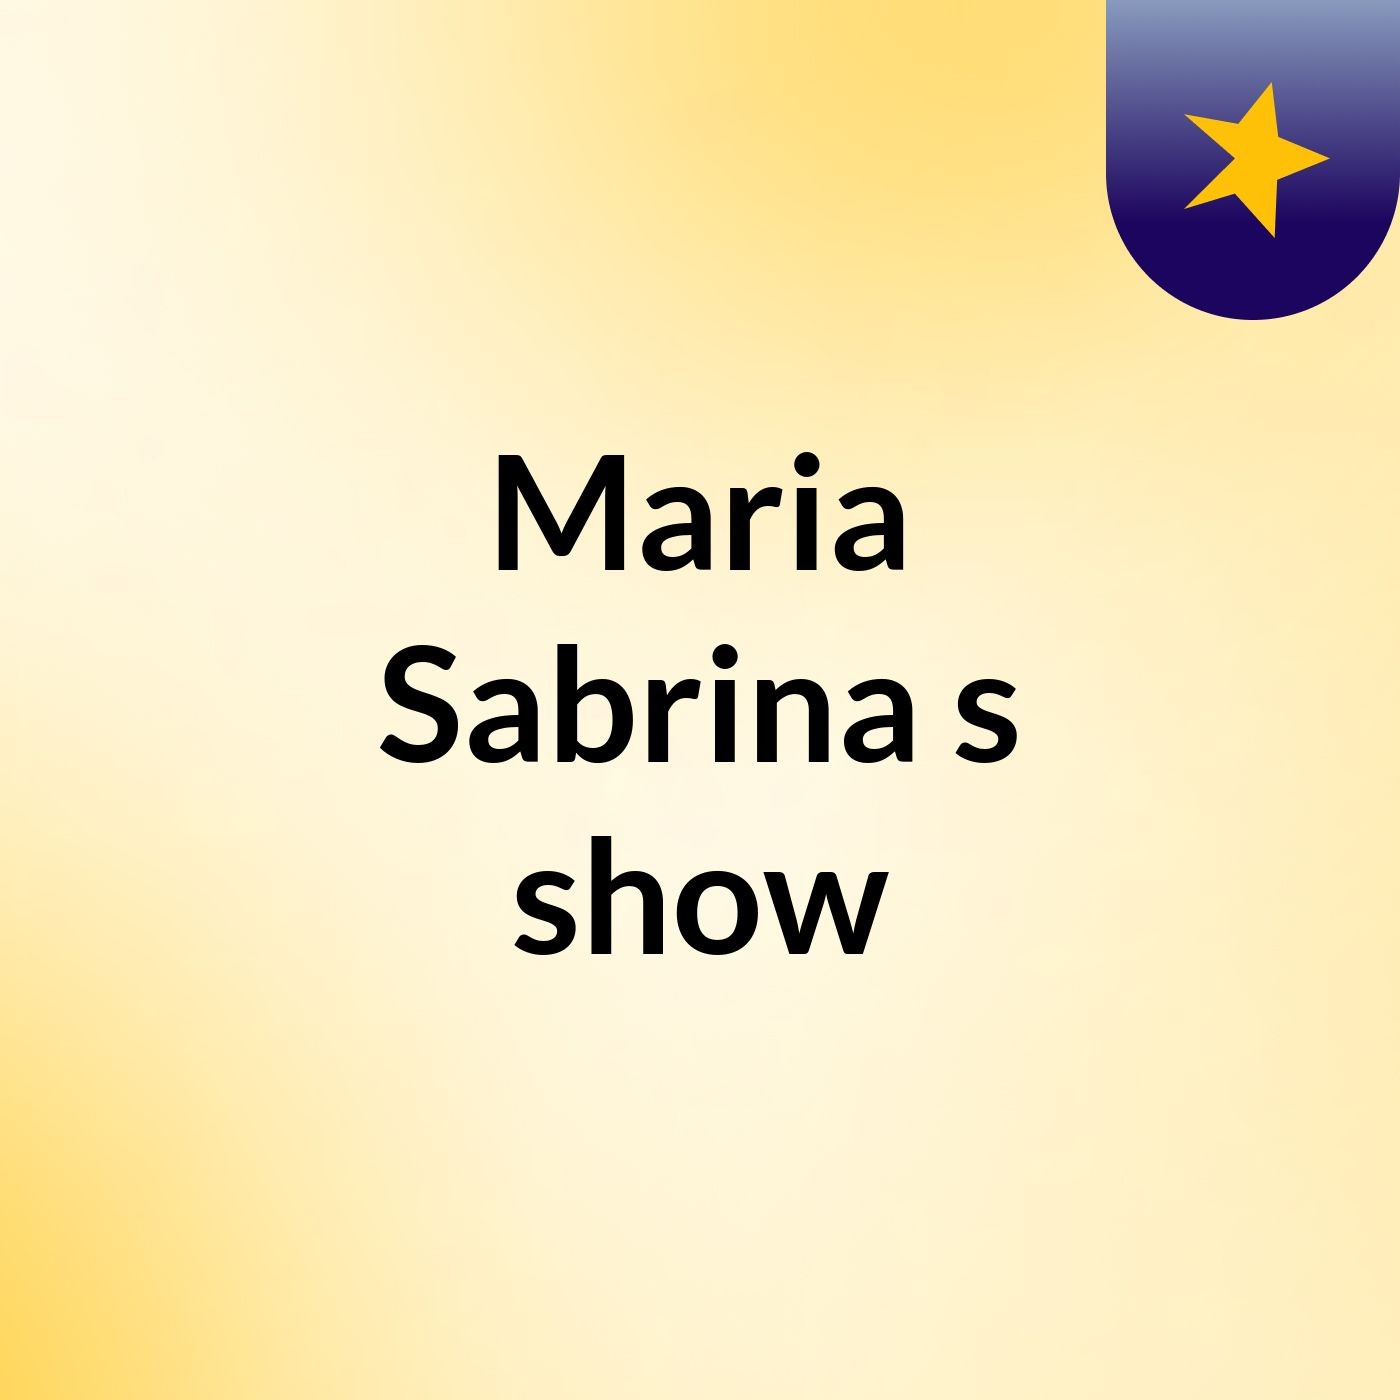 Maria Sabrina's show